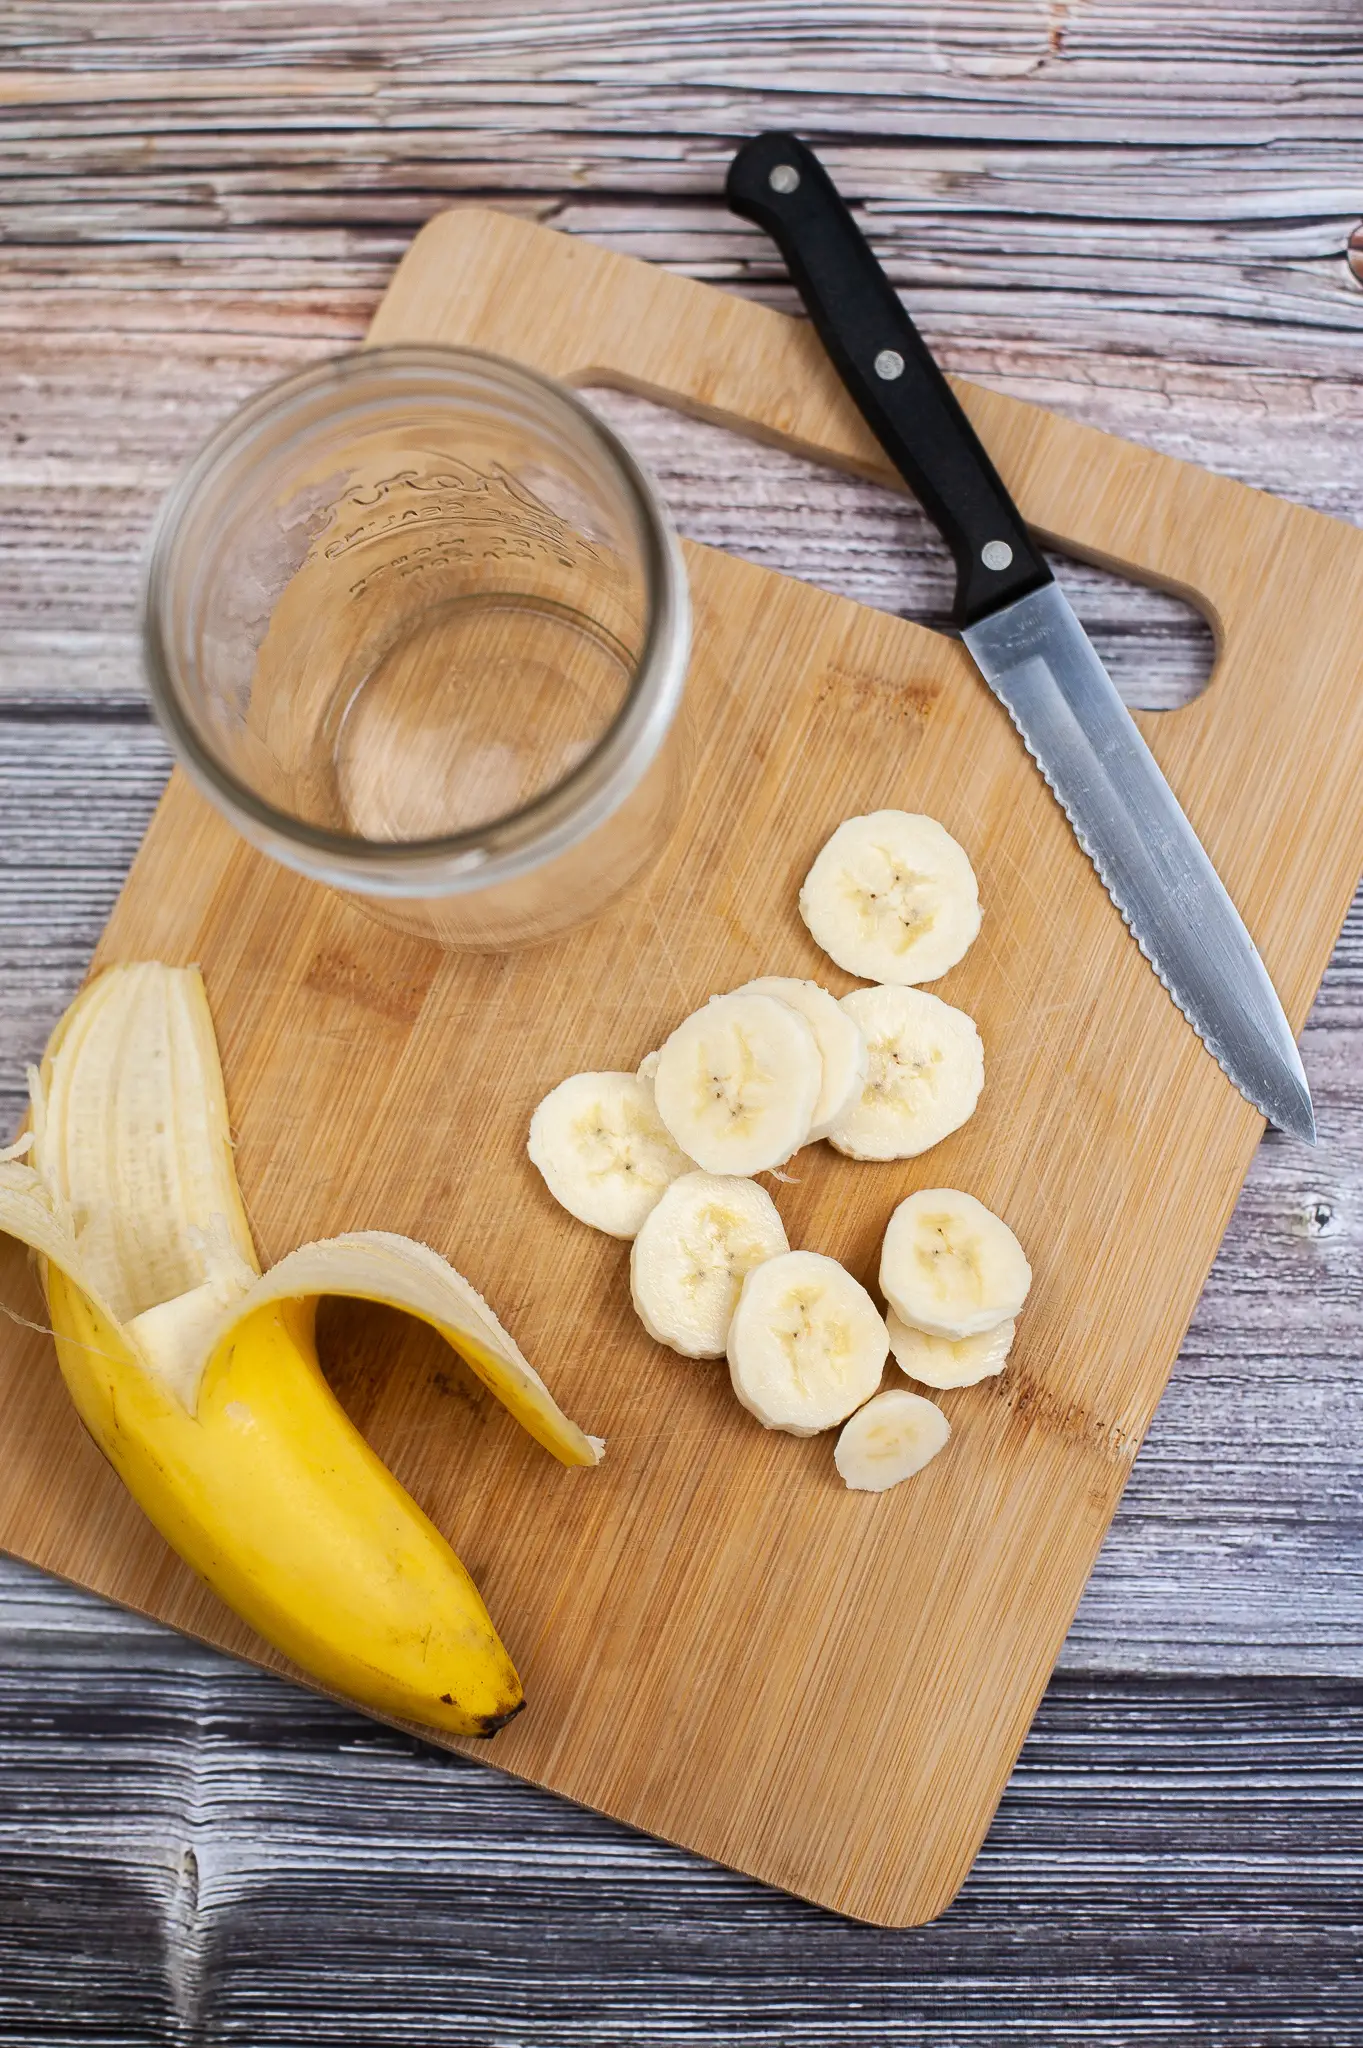 Cutting board with sliced banana.